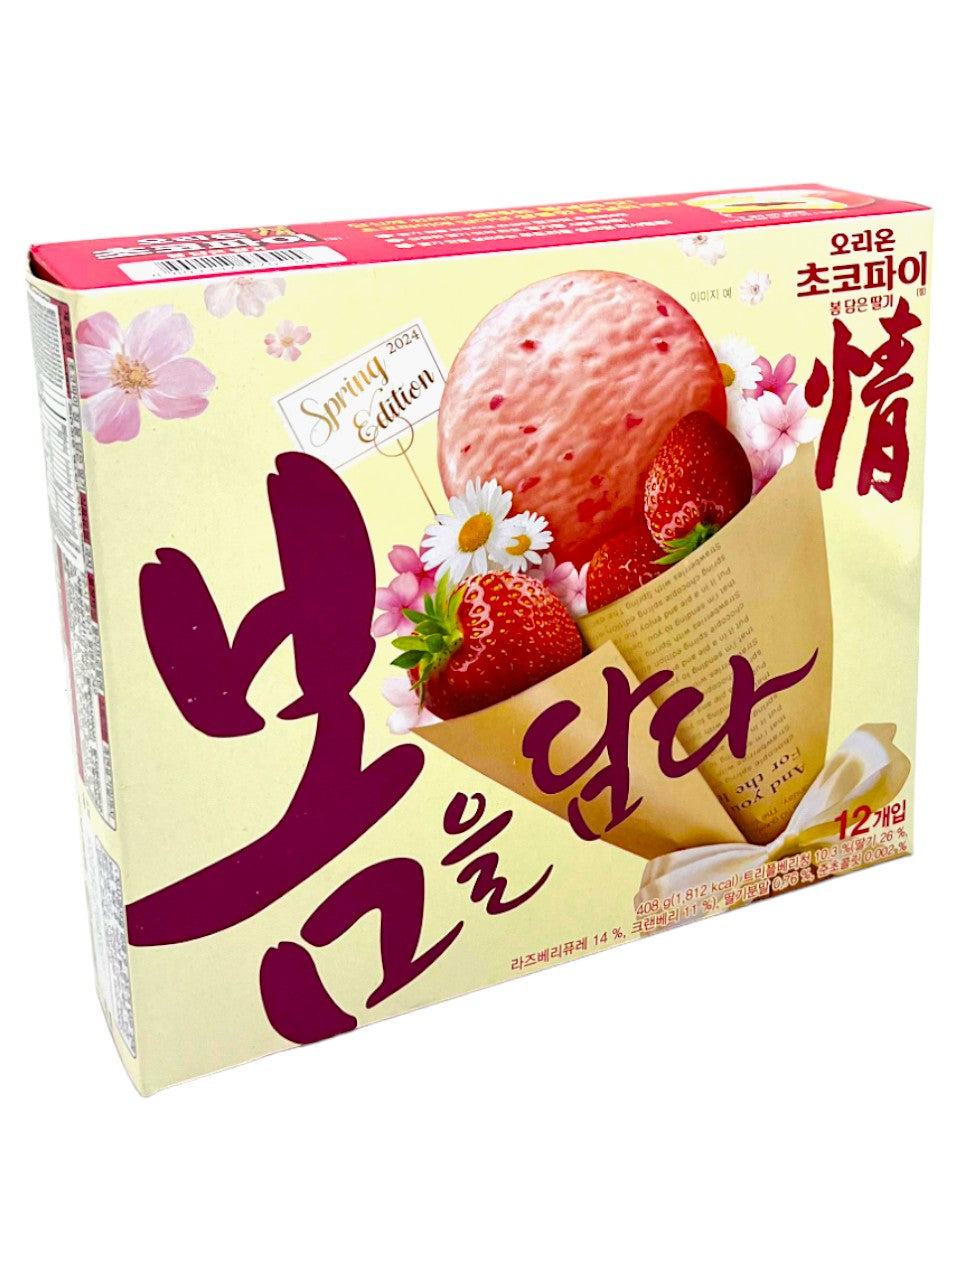 Orion Choco Pie Strawberry Spring Edition (Korea)